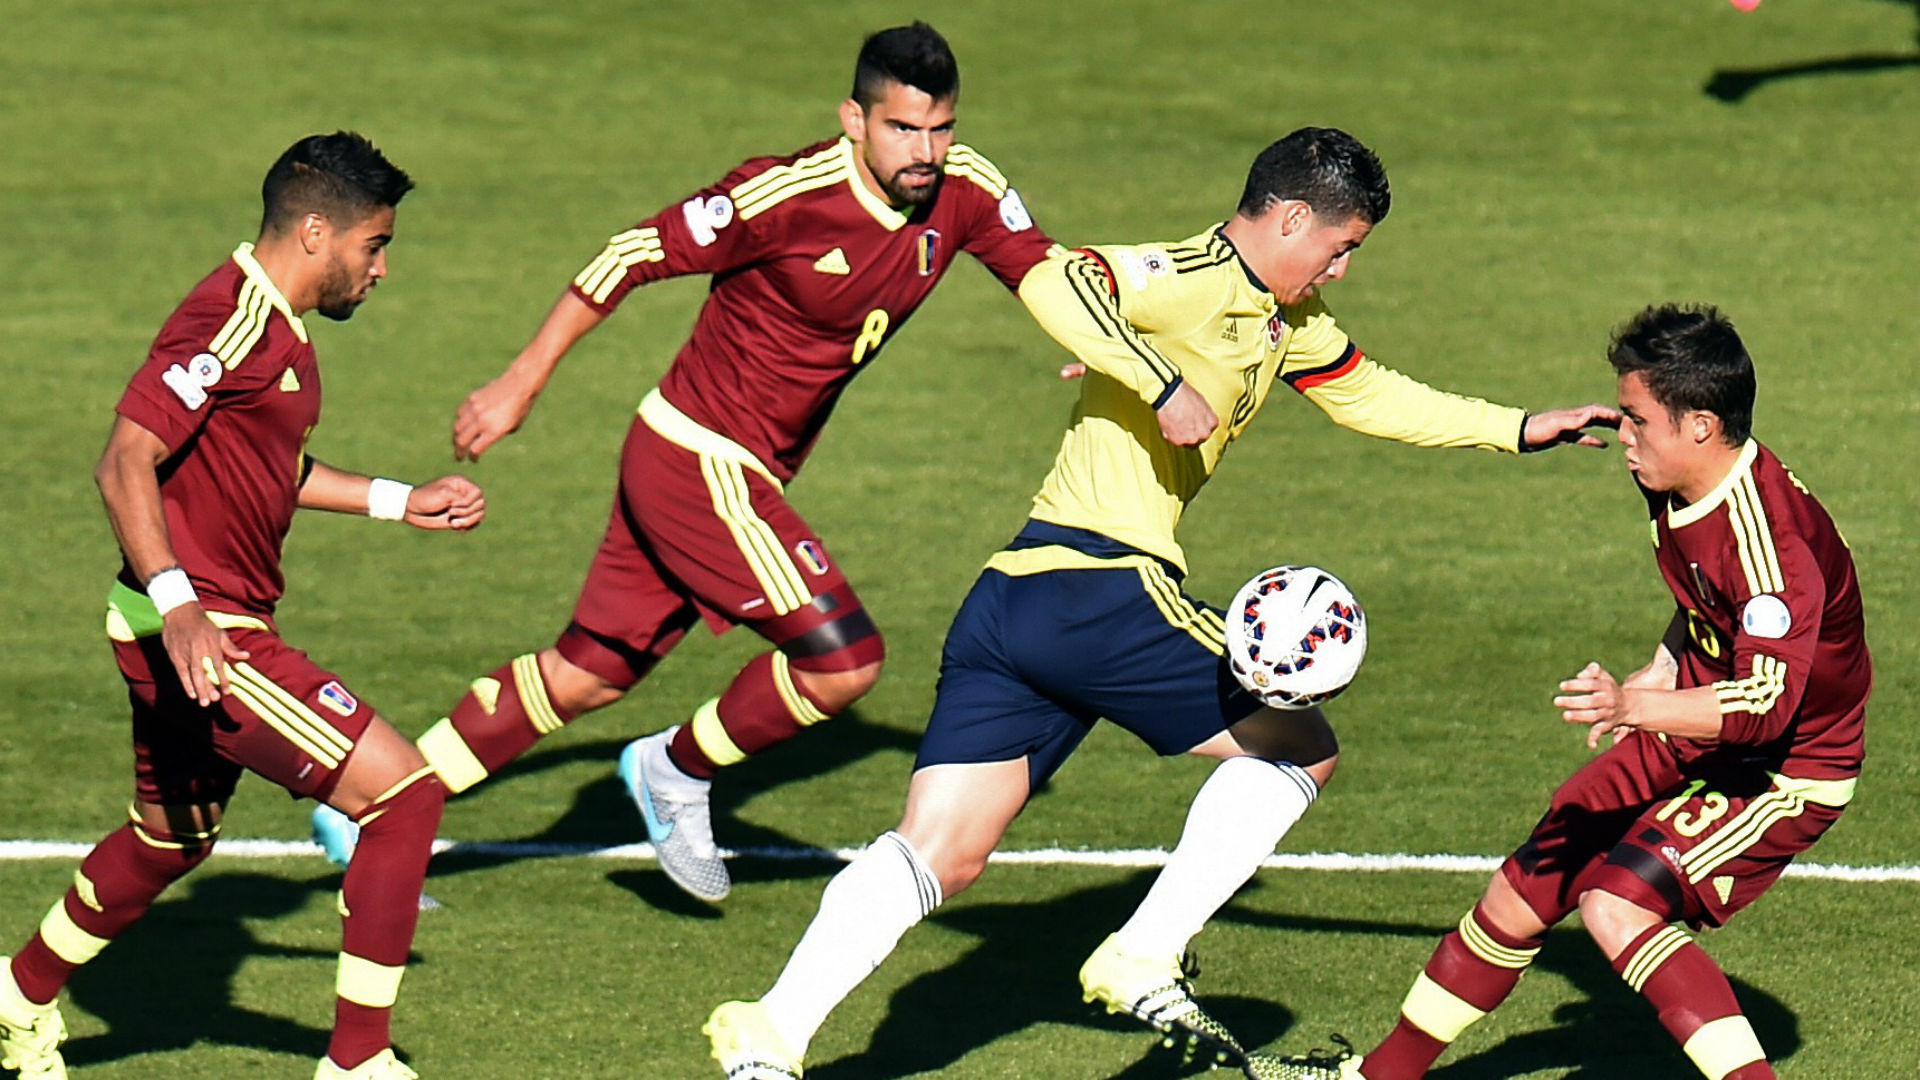 Копа Америка 2015. Колумбия - Венесуэла 0:1. Рондон приносит аутсайдеру победу - изображение 4